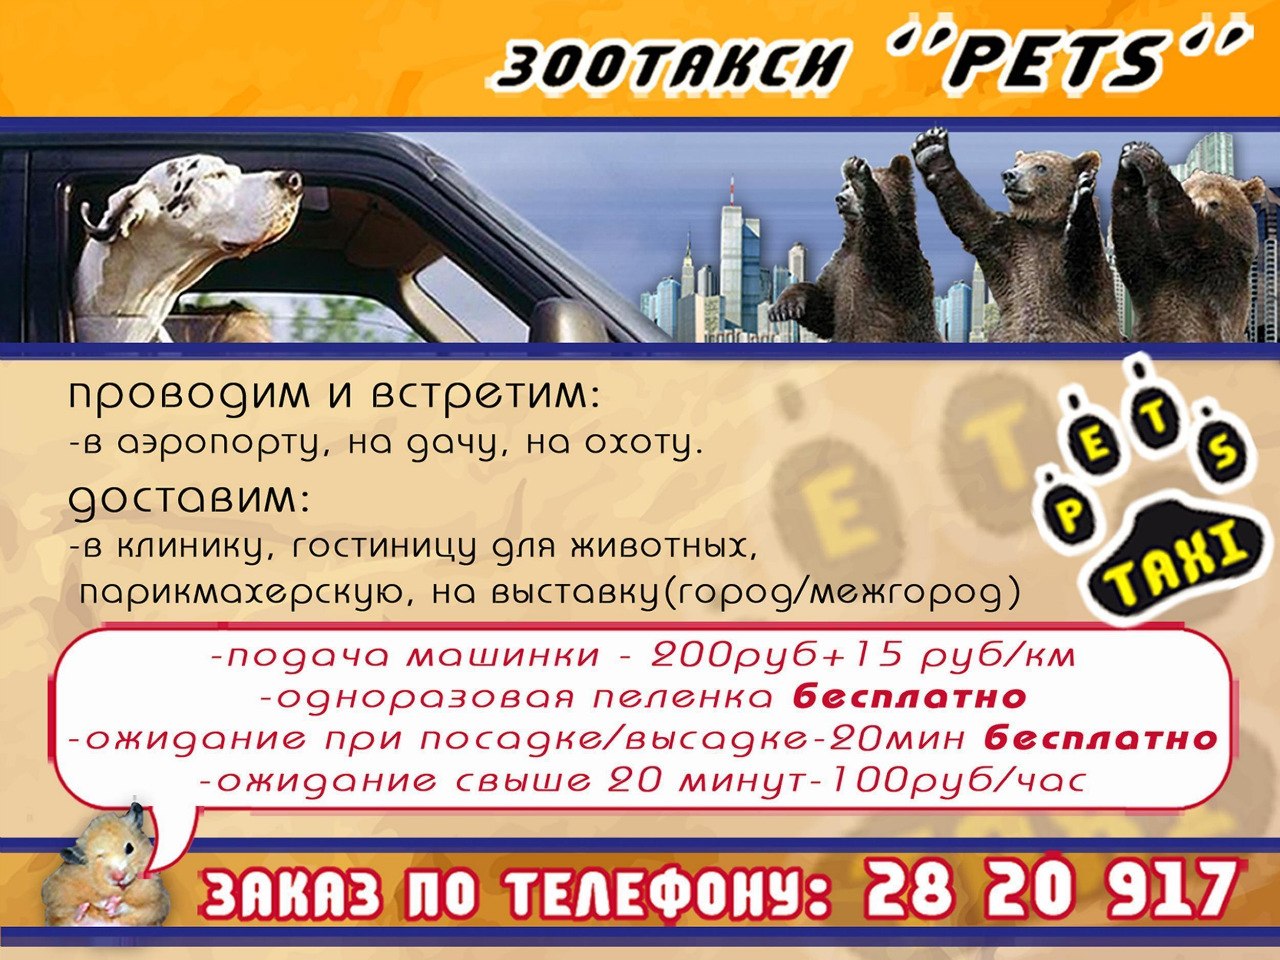 Зоотакси Красноярска - такси для животных, заказ по тел: 28-20-917 NtkWVUSrA40